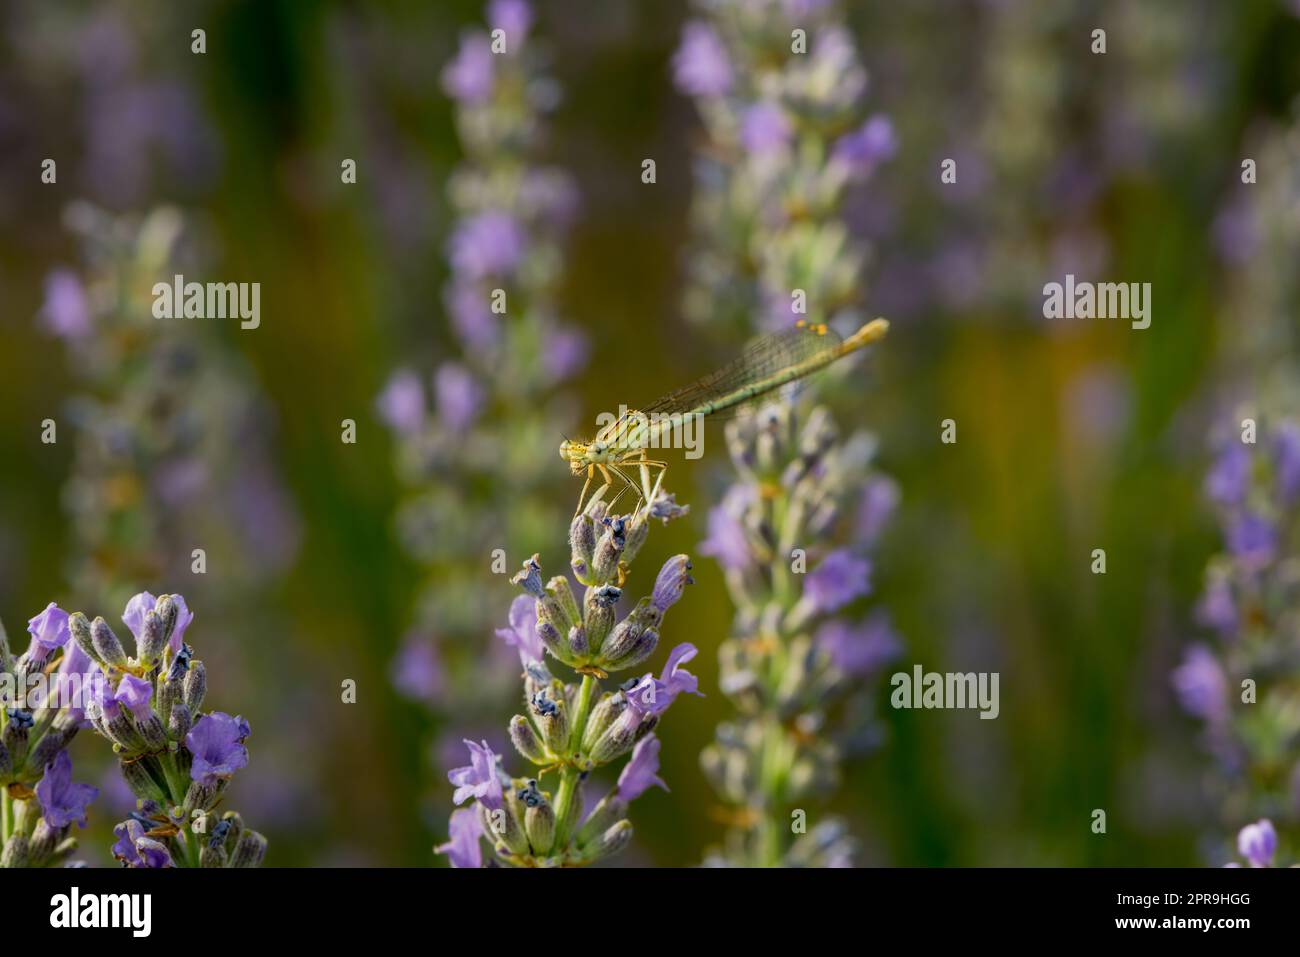 una libellula su una fioritura di lavanda Foto Stock